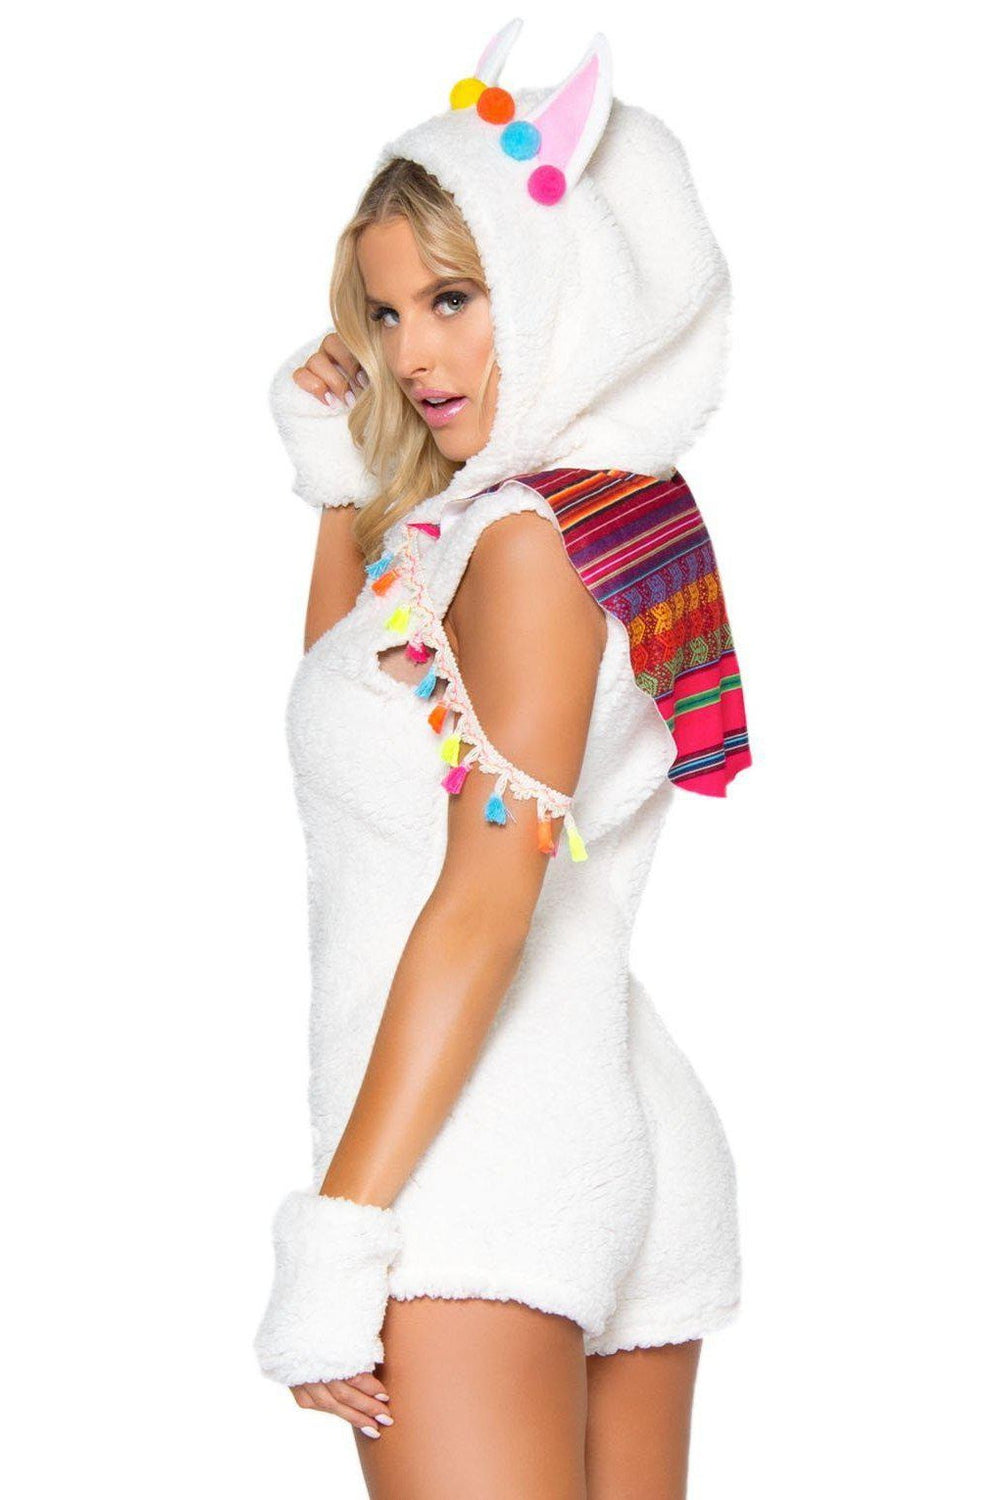 Cuddly Llama Costume-Animal Costumes-Leg Avenue-SEXYSHOES.COM